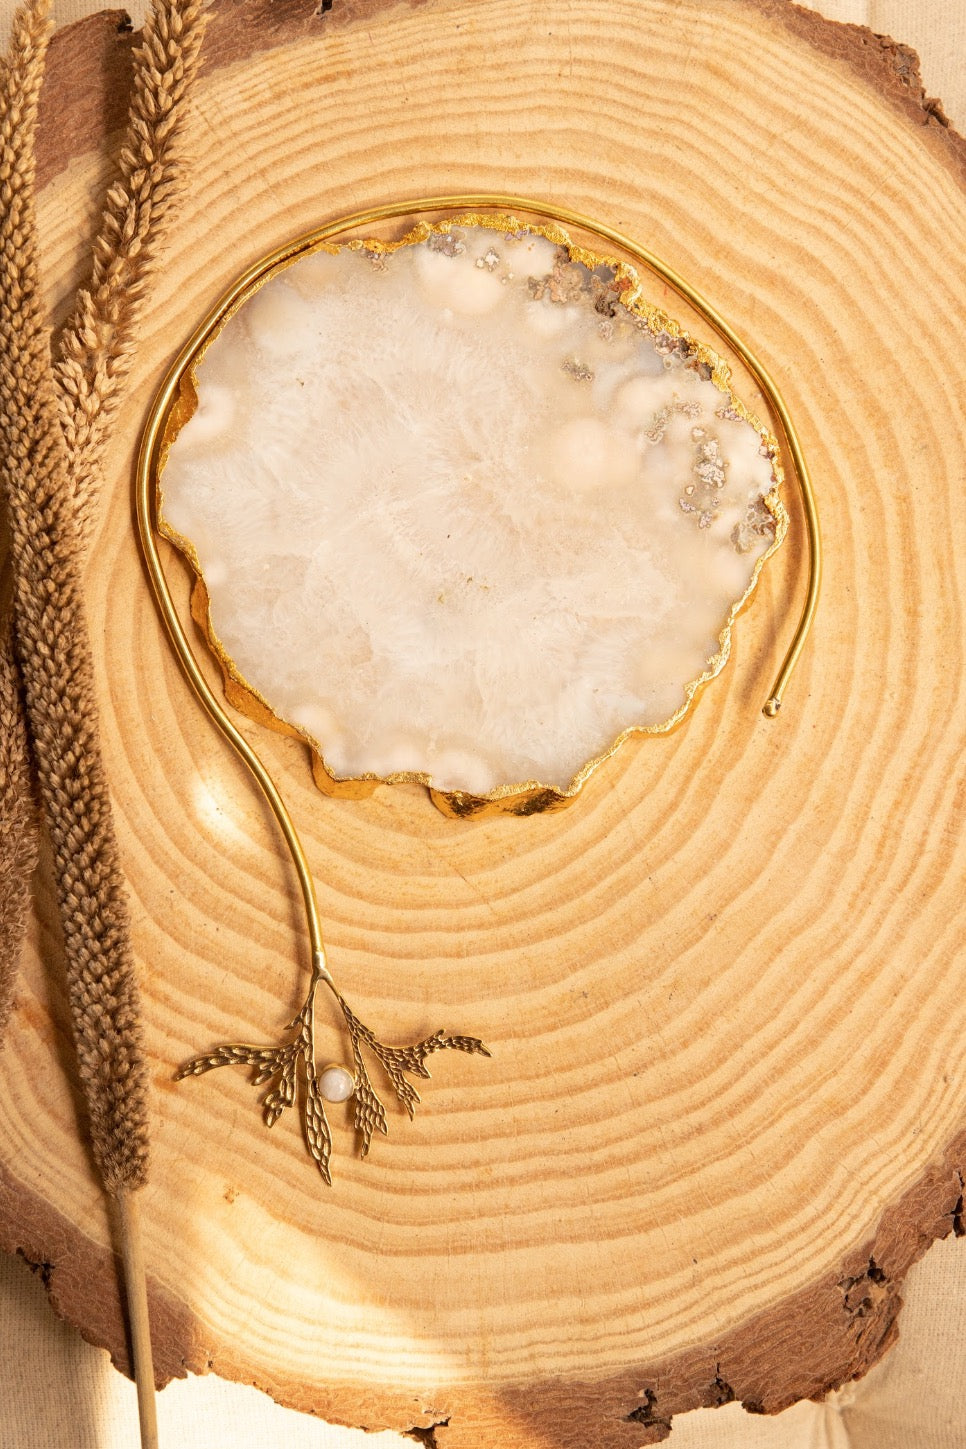 Floating fern necklace